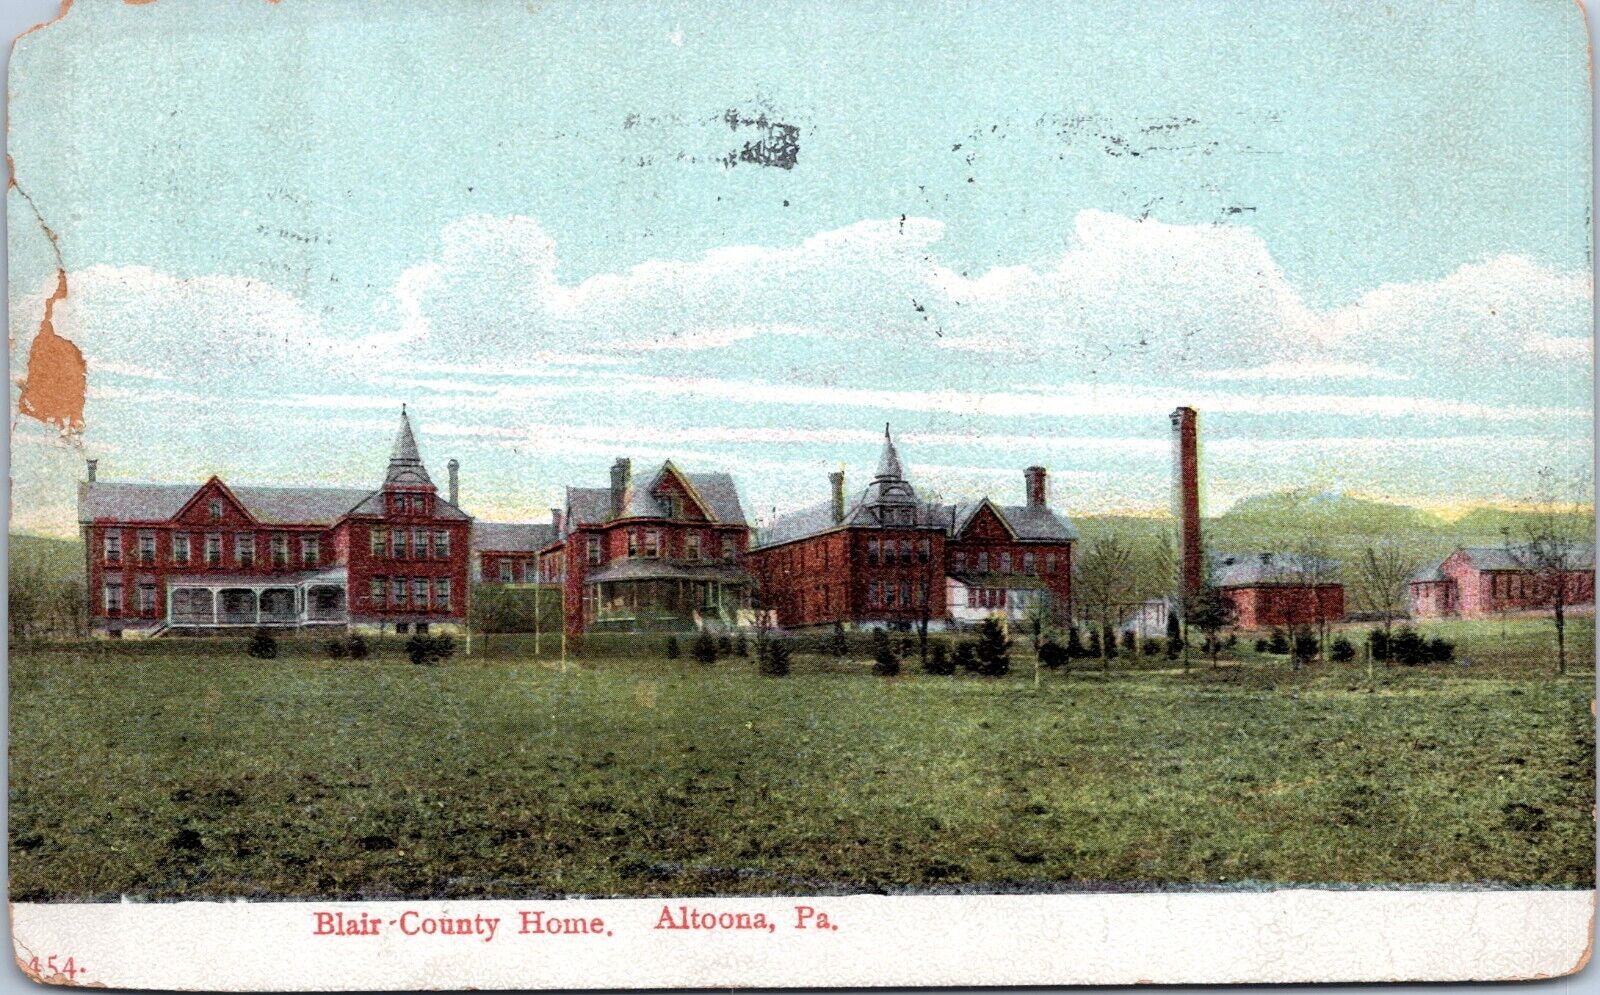 Blair County Home, Altoona Pennsylvania- 1914 d/b Postcard- Sanitarium, Almhouse